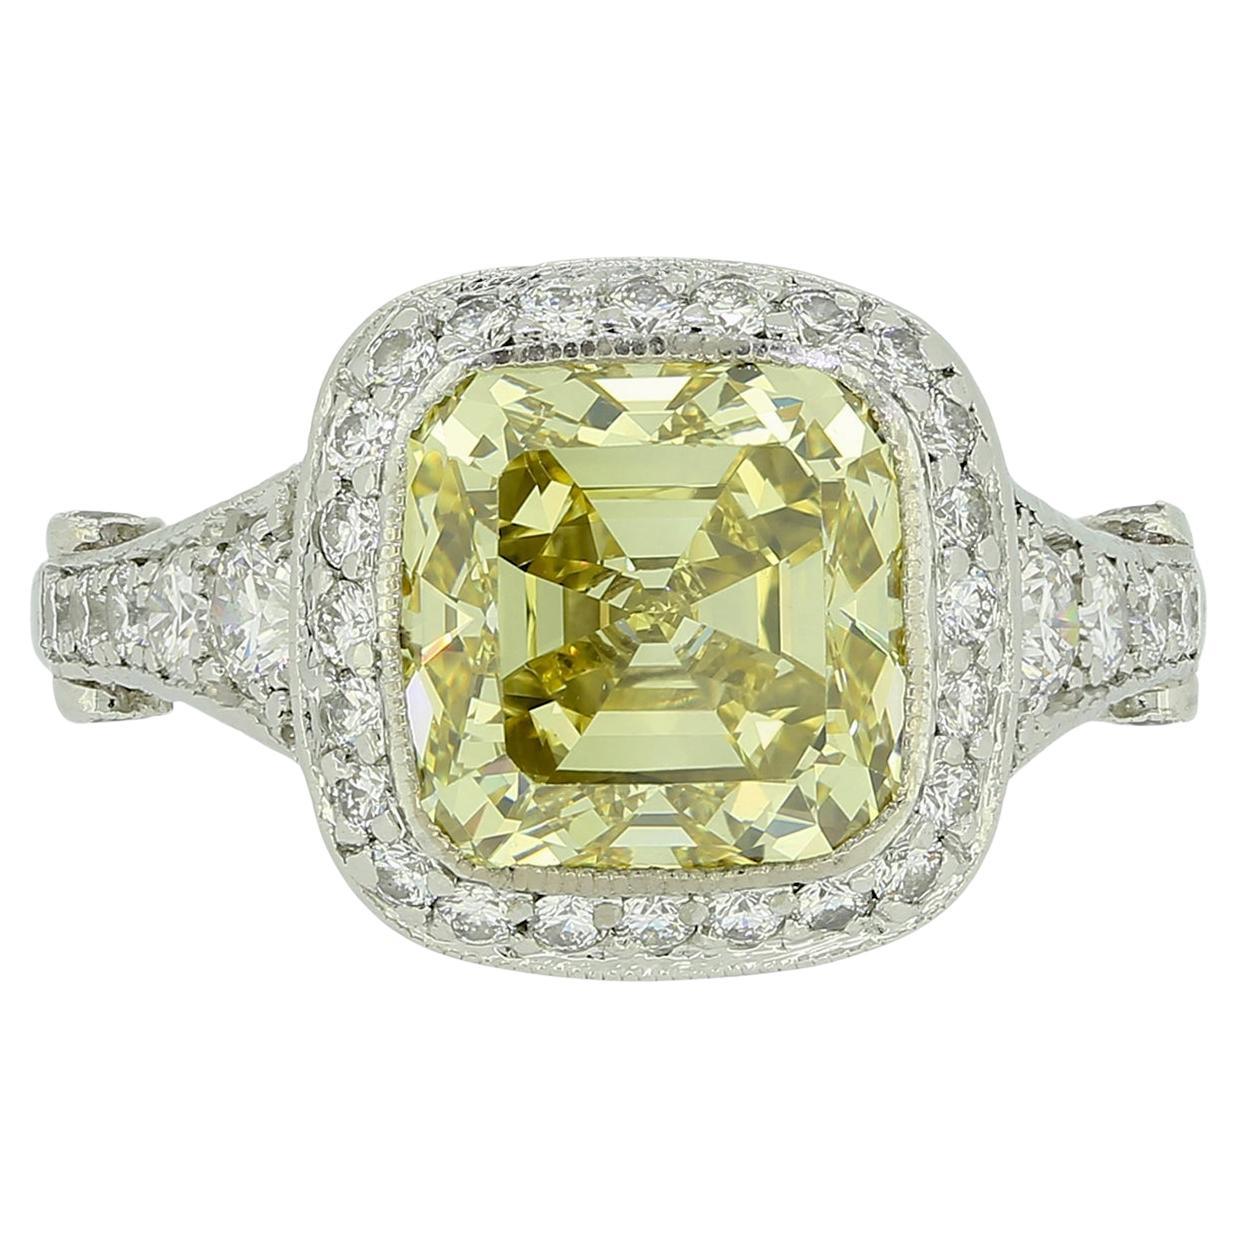 Tiffany & Co. Legacy Verlobungsring mit 4,00 Karat intensiv gelbem Fancy-Diamant